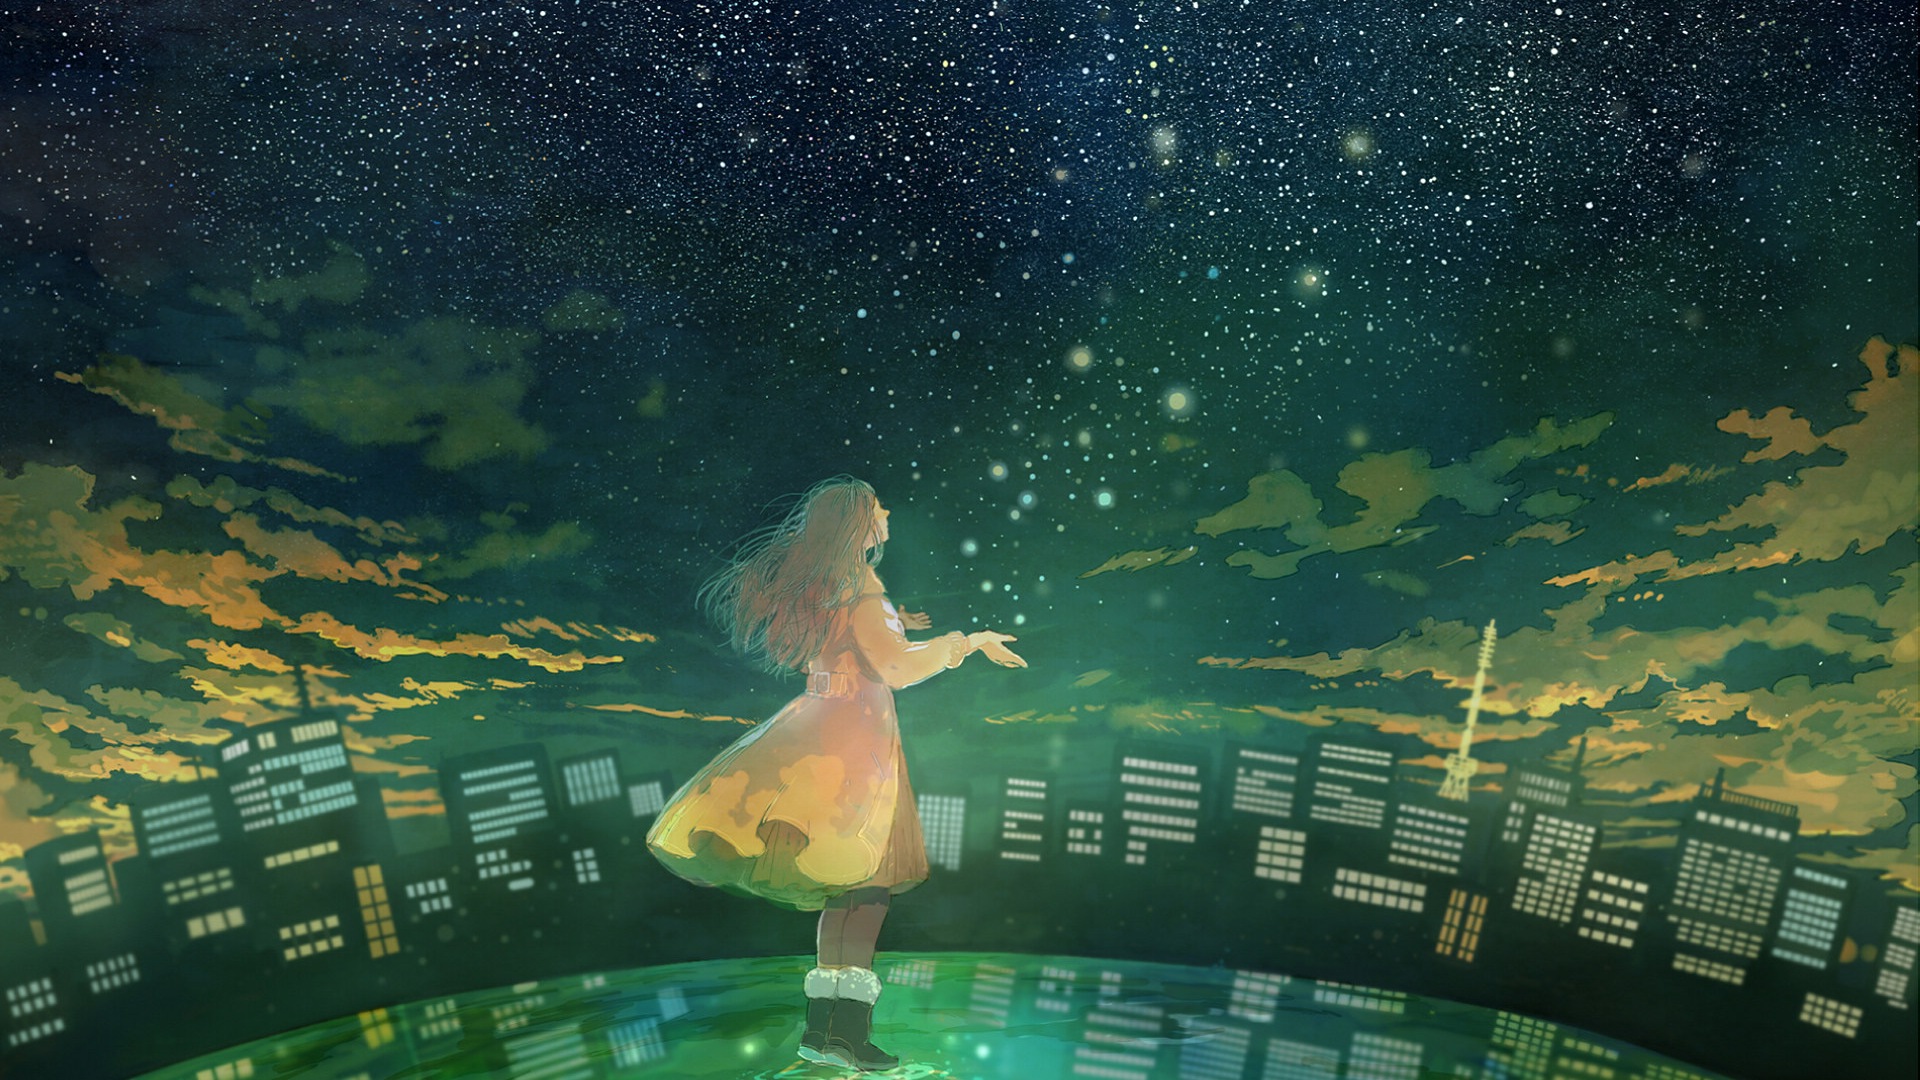 Firefly Summer beautiful anime wallpaper #3 - 1920x1080